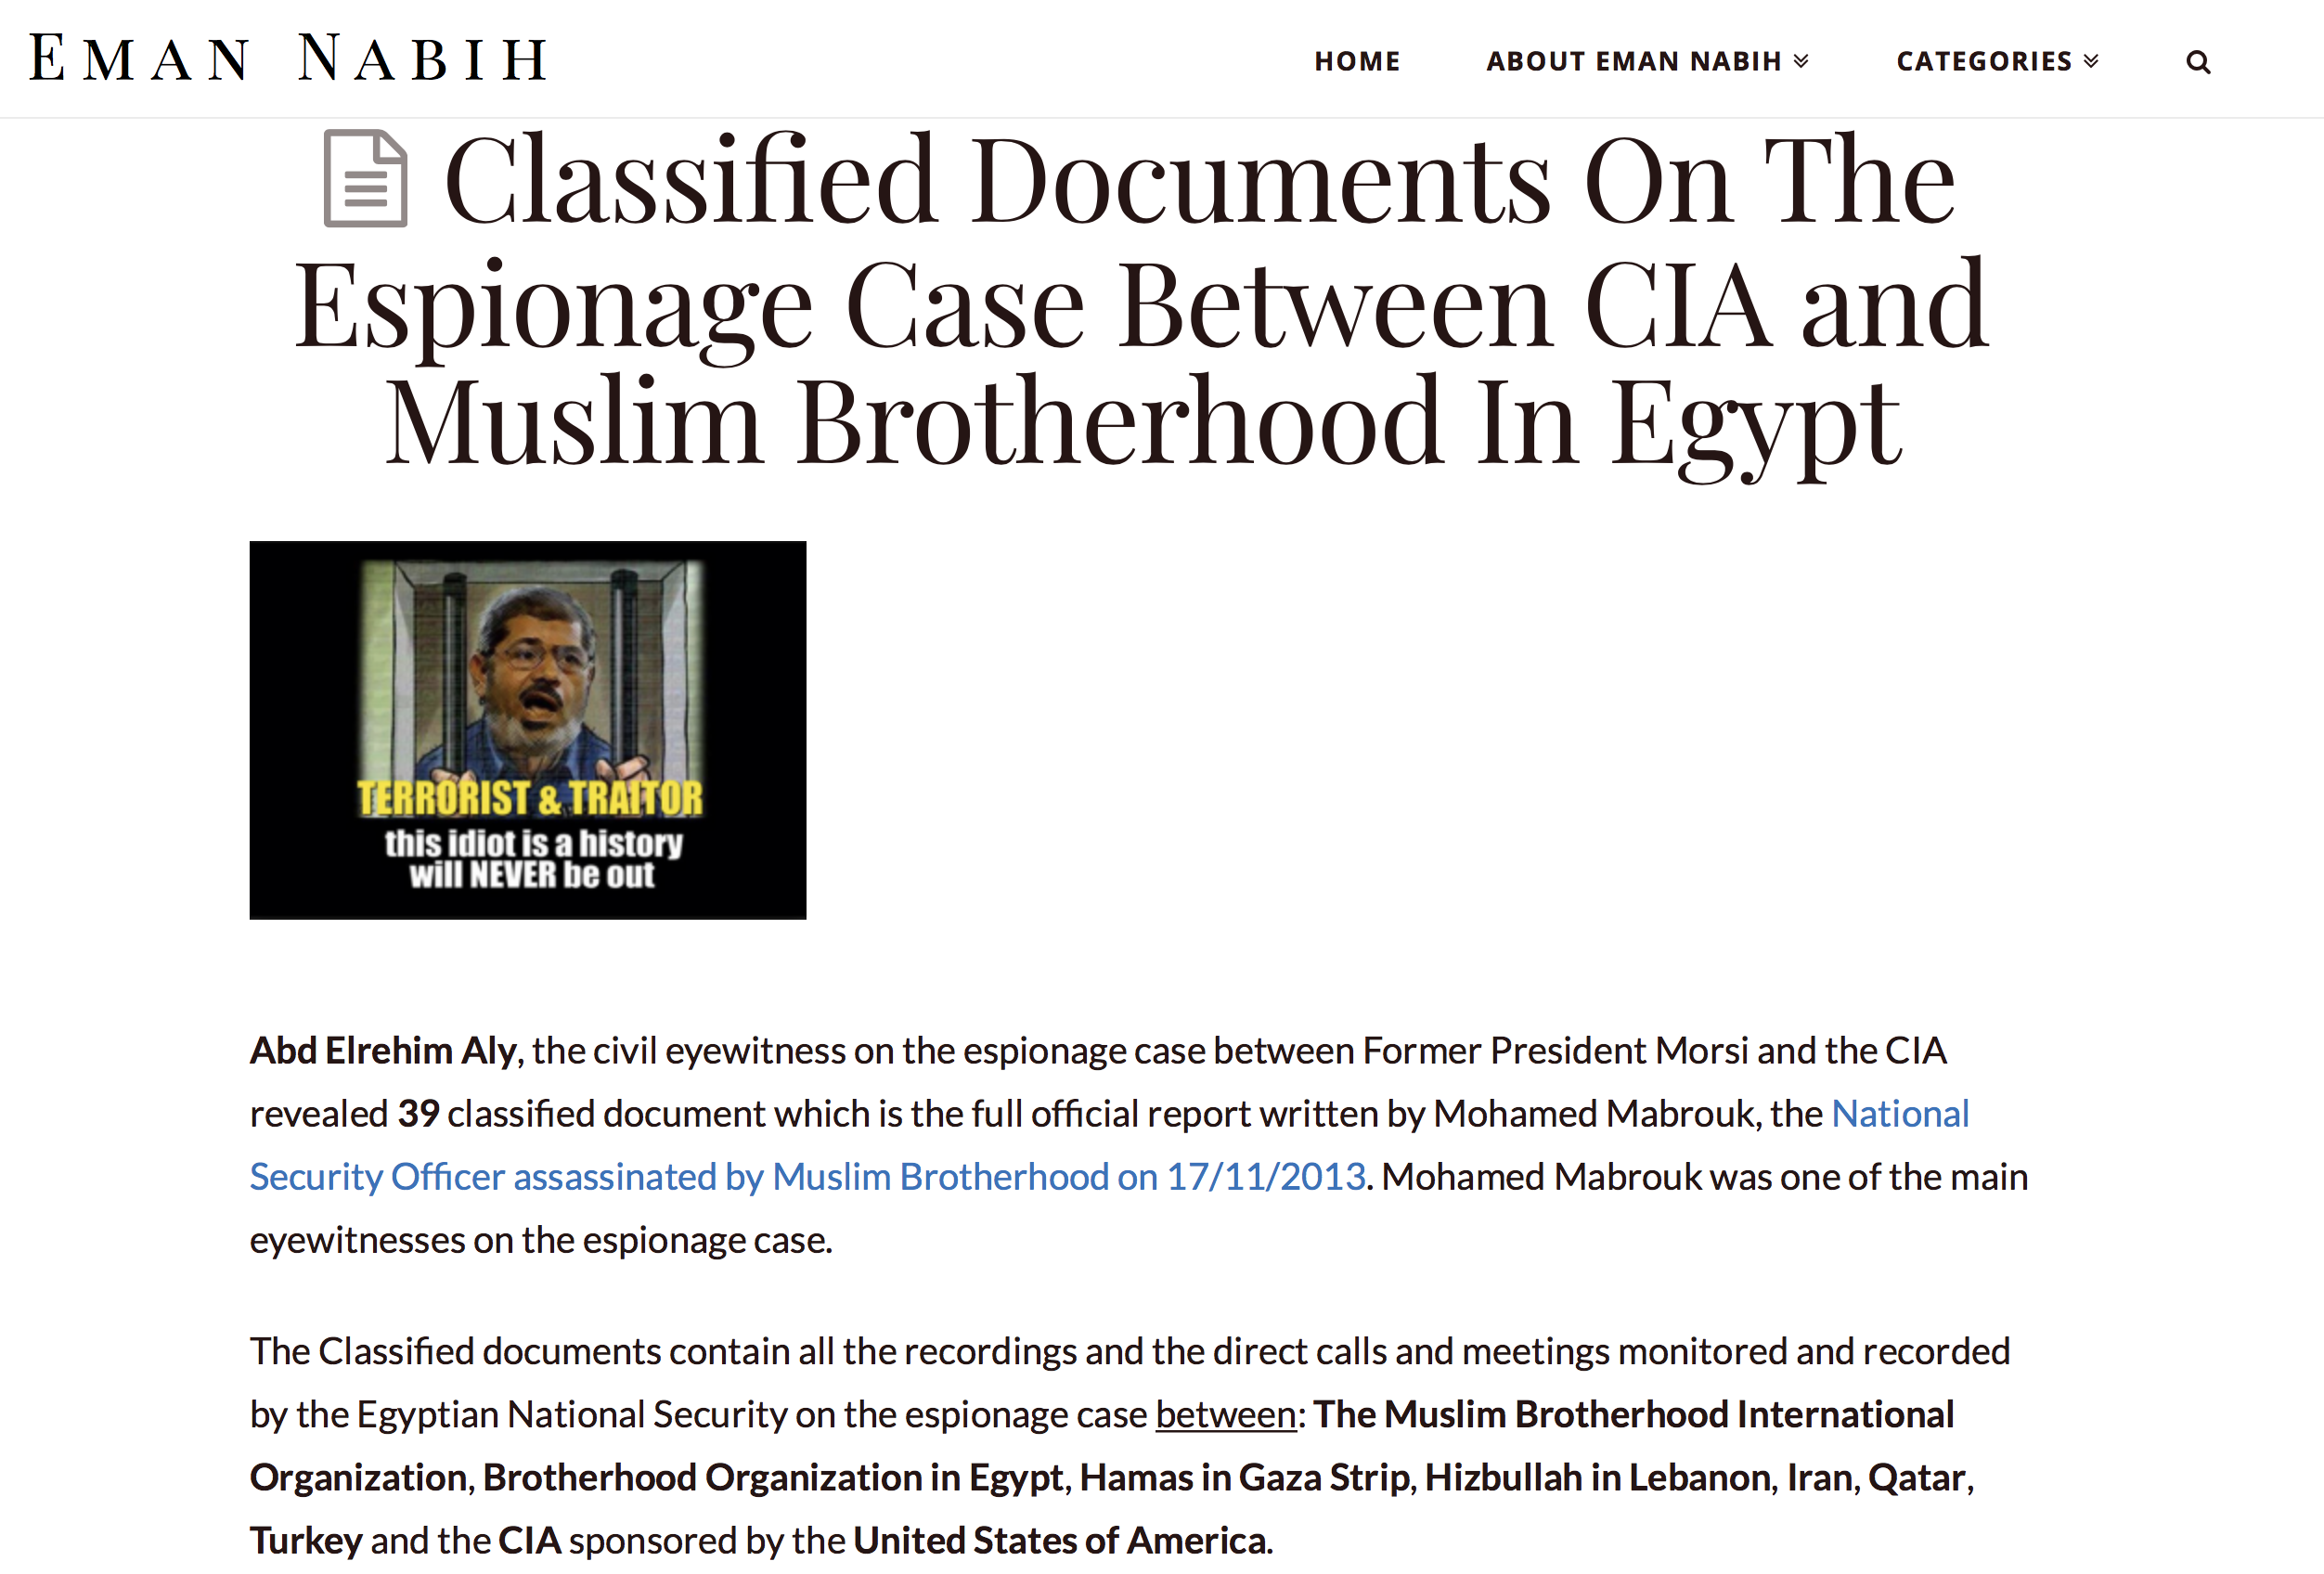 Classified Documents on CIA and Muslim Brotherhood